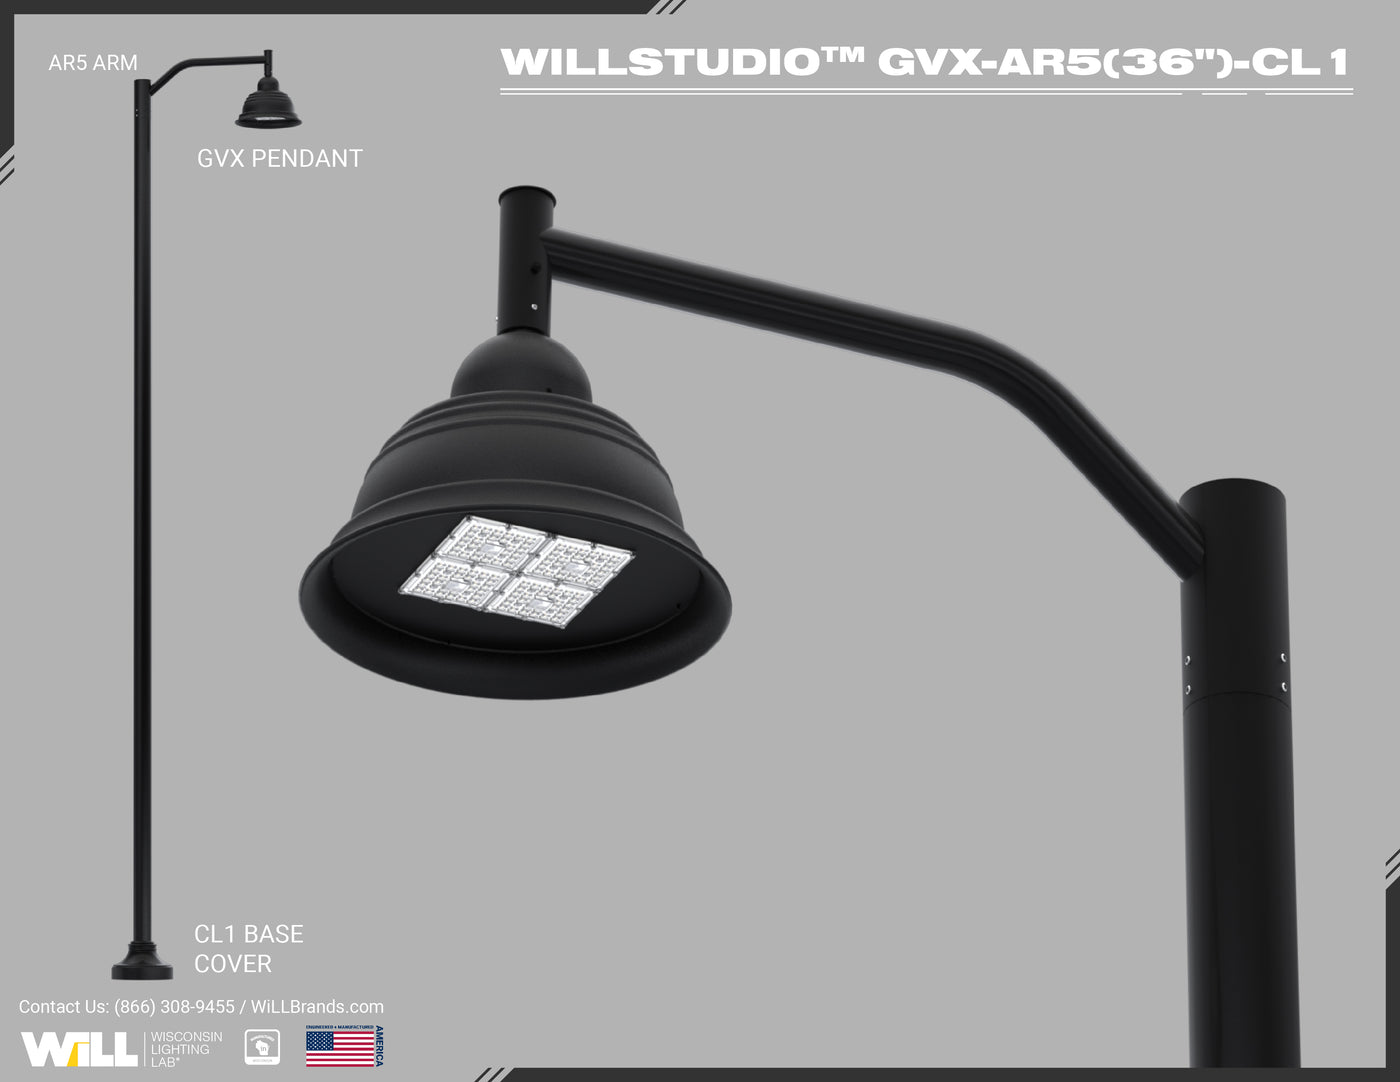 WiLLstudio™ GVX-AR5(36")-CL1